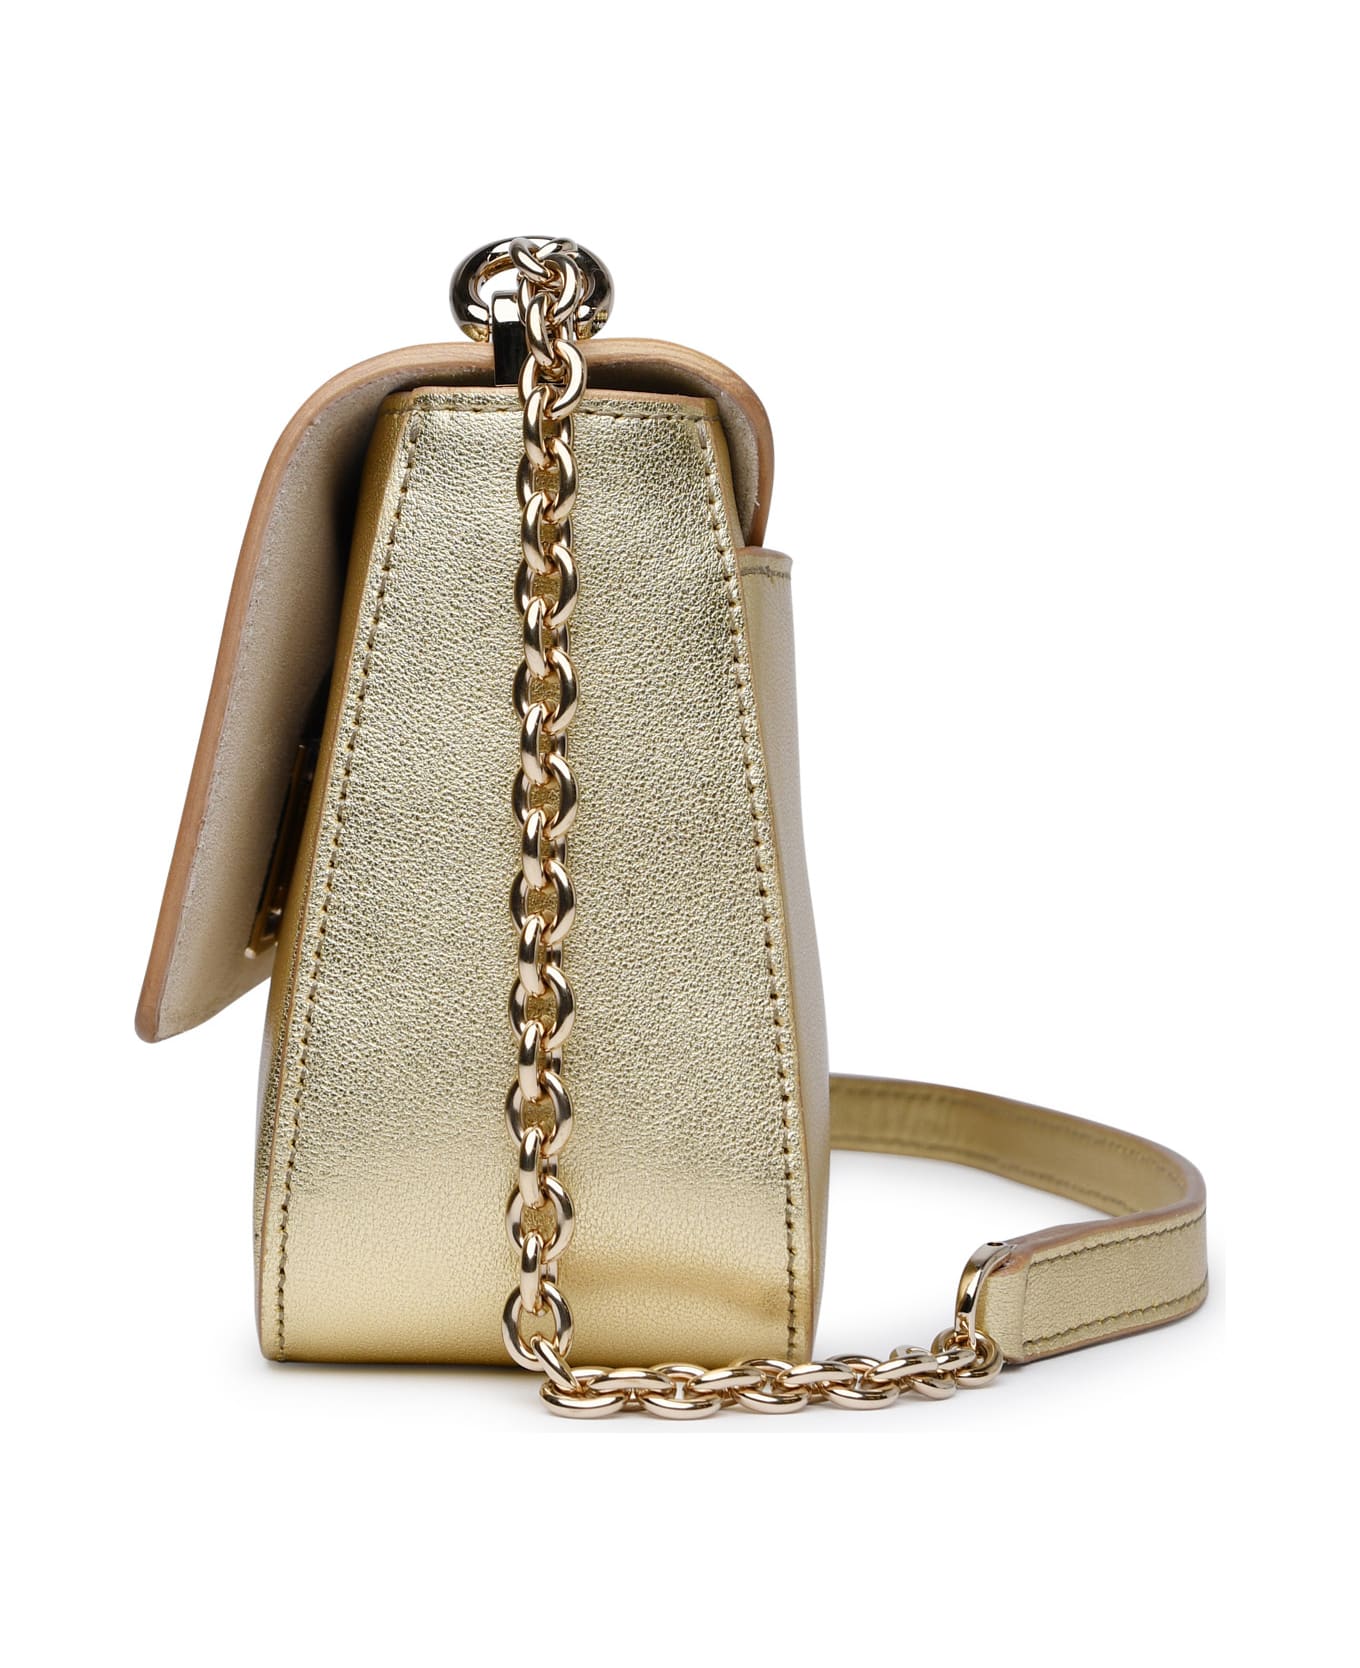 Furla 'furla 1927' Gold Calf Leather Bag - Gold ショルダーバッグ